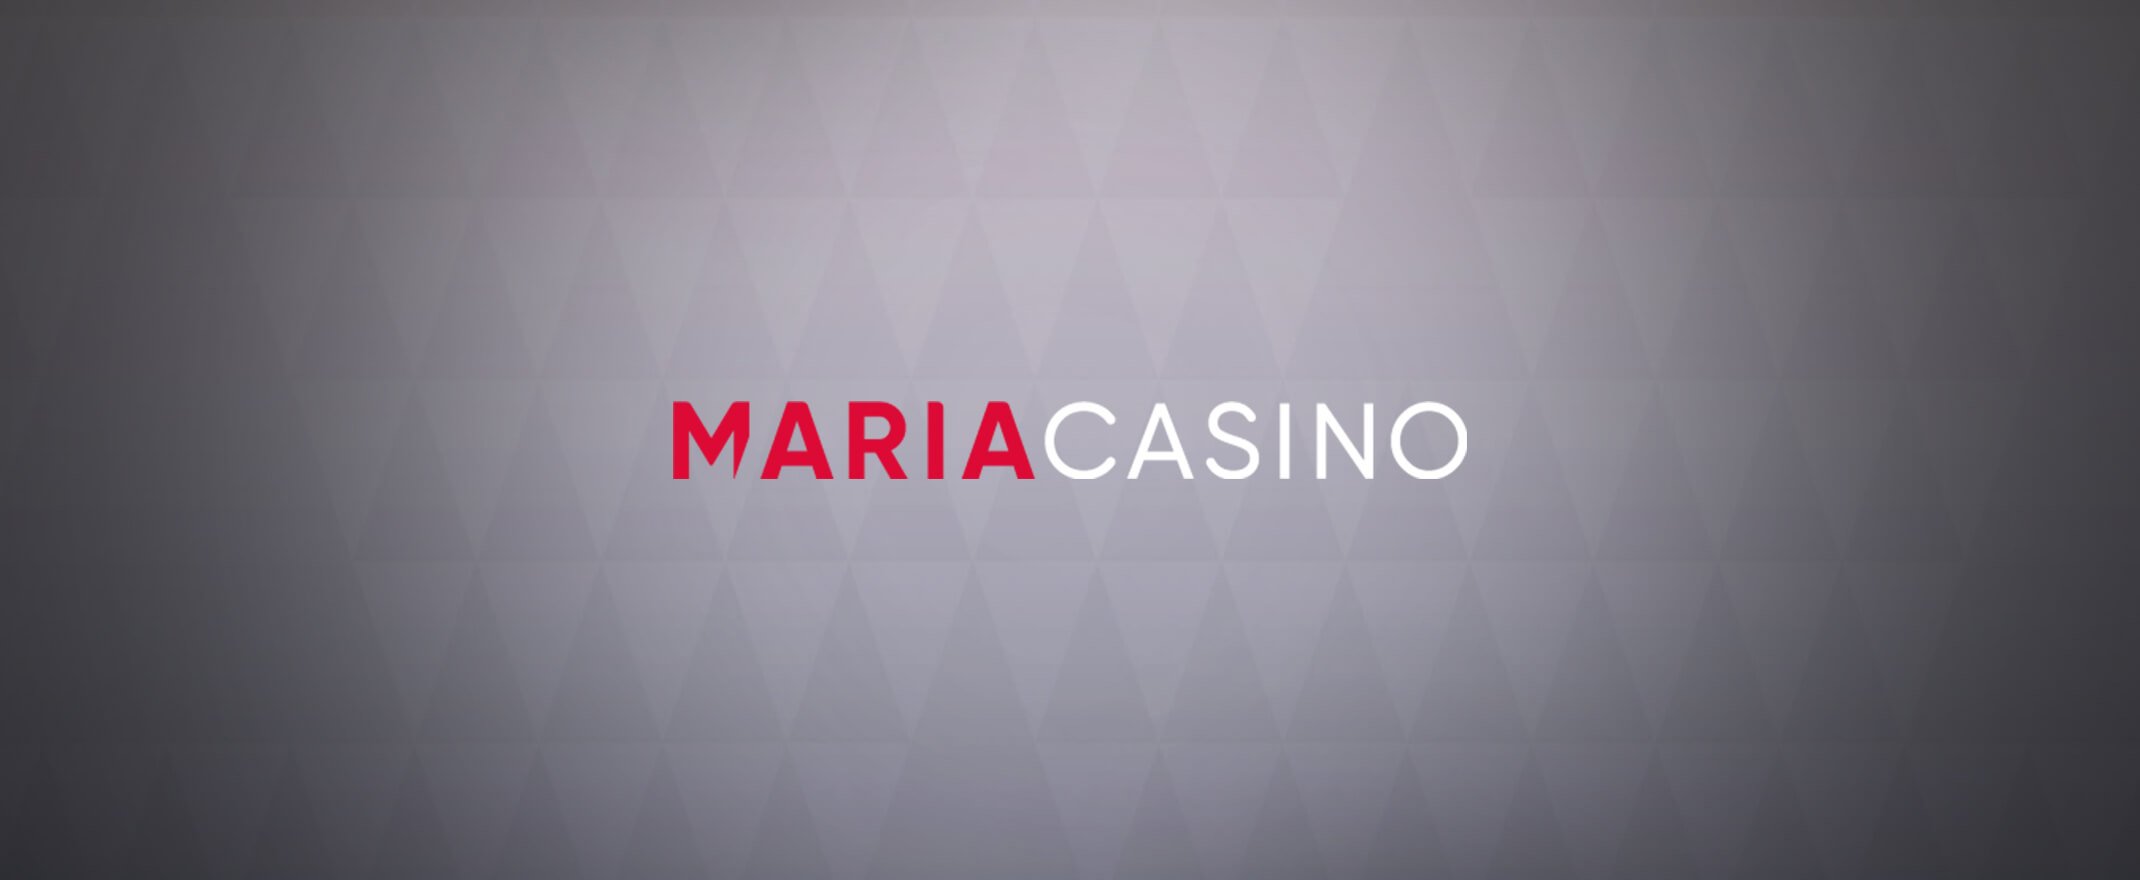 Maria Casino nyheter